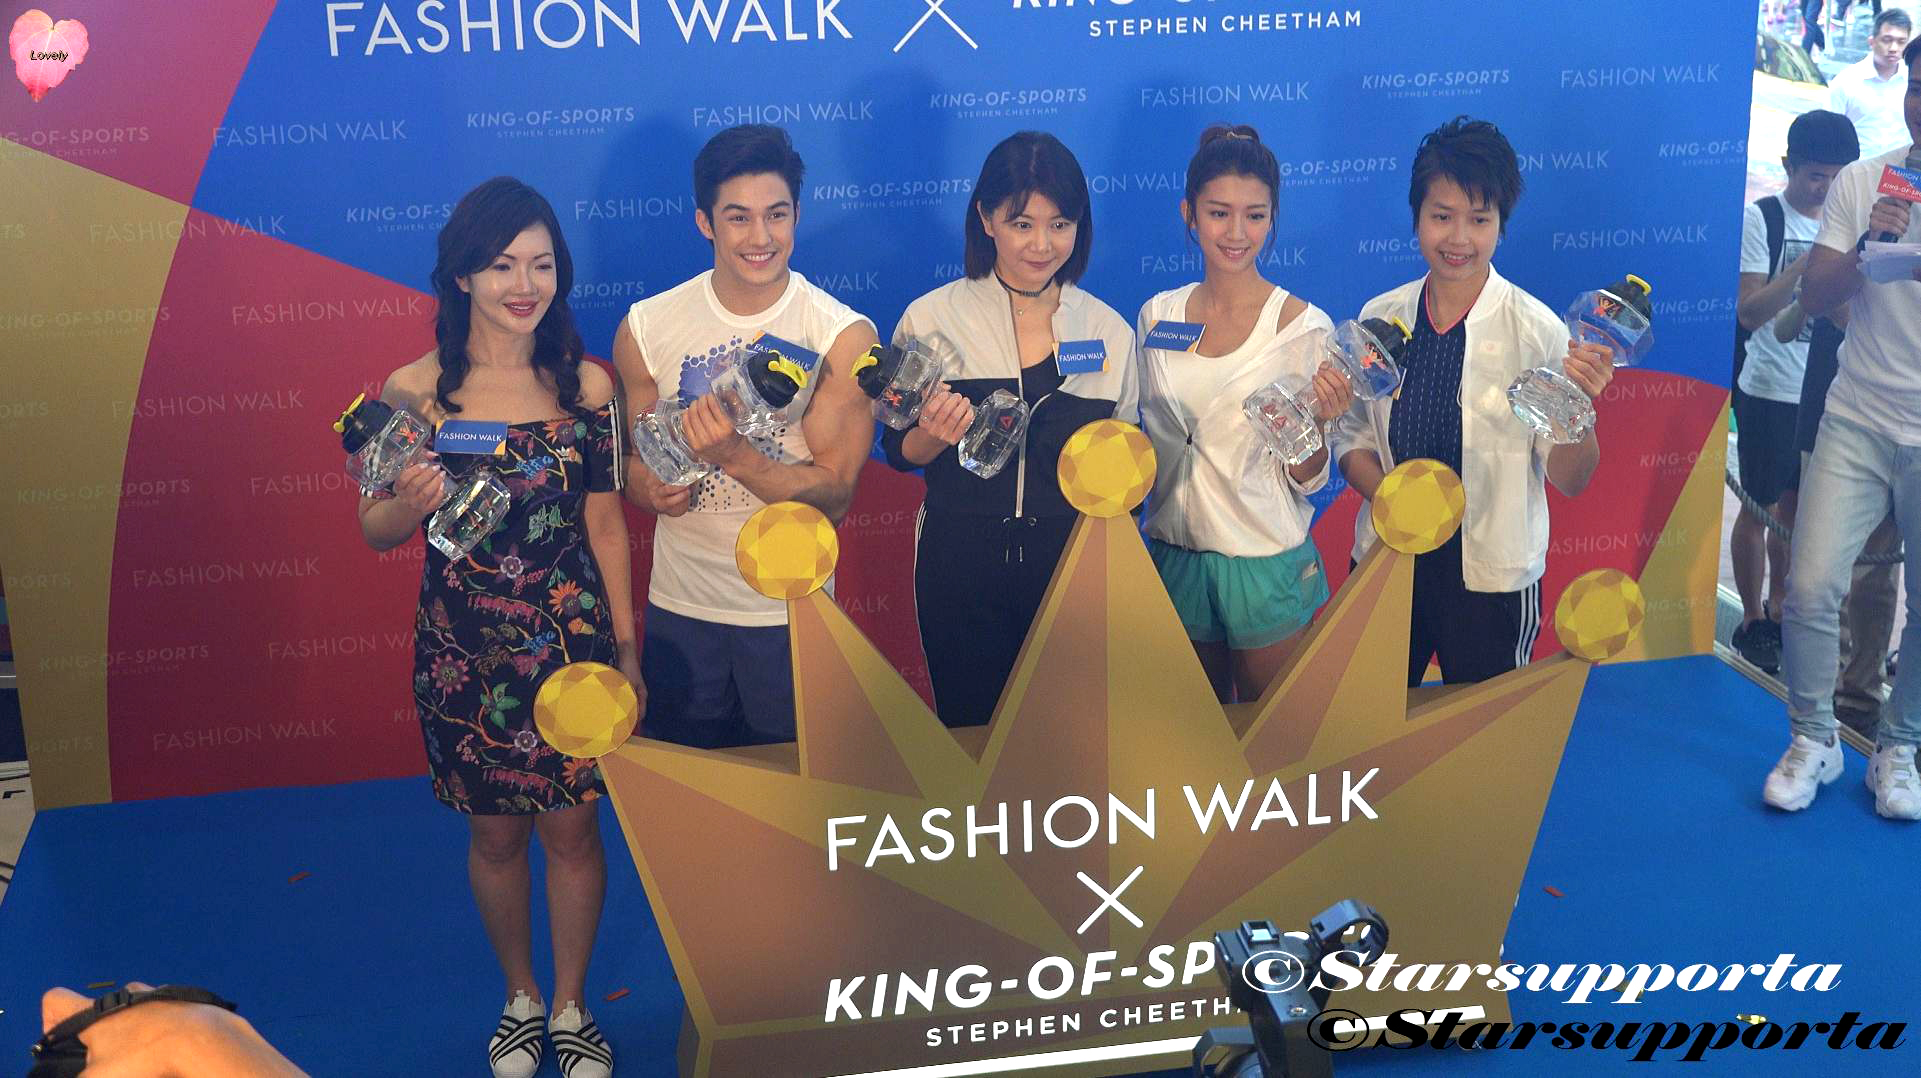 20180613 Fashion Walk King of Sports盛夏慶典揭幕禮 @香港銅鑼灣Fashion Walk 